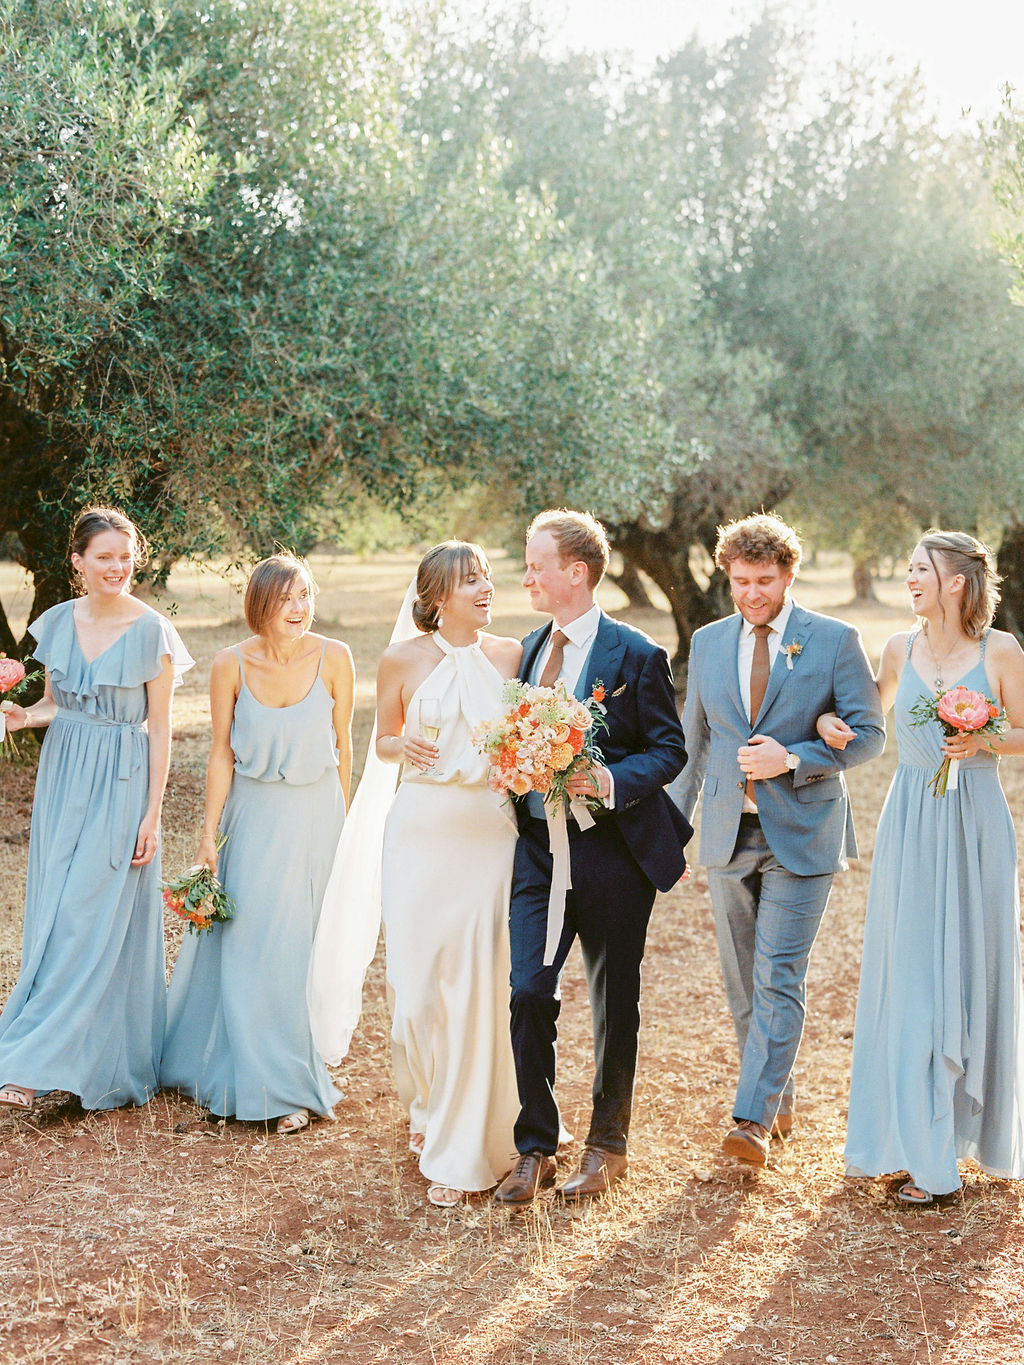 Olive Grove Wedding In Greece 